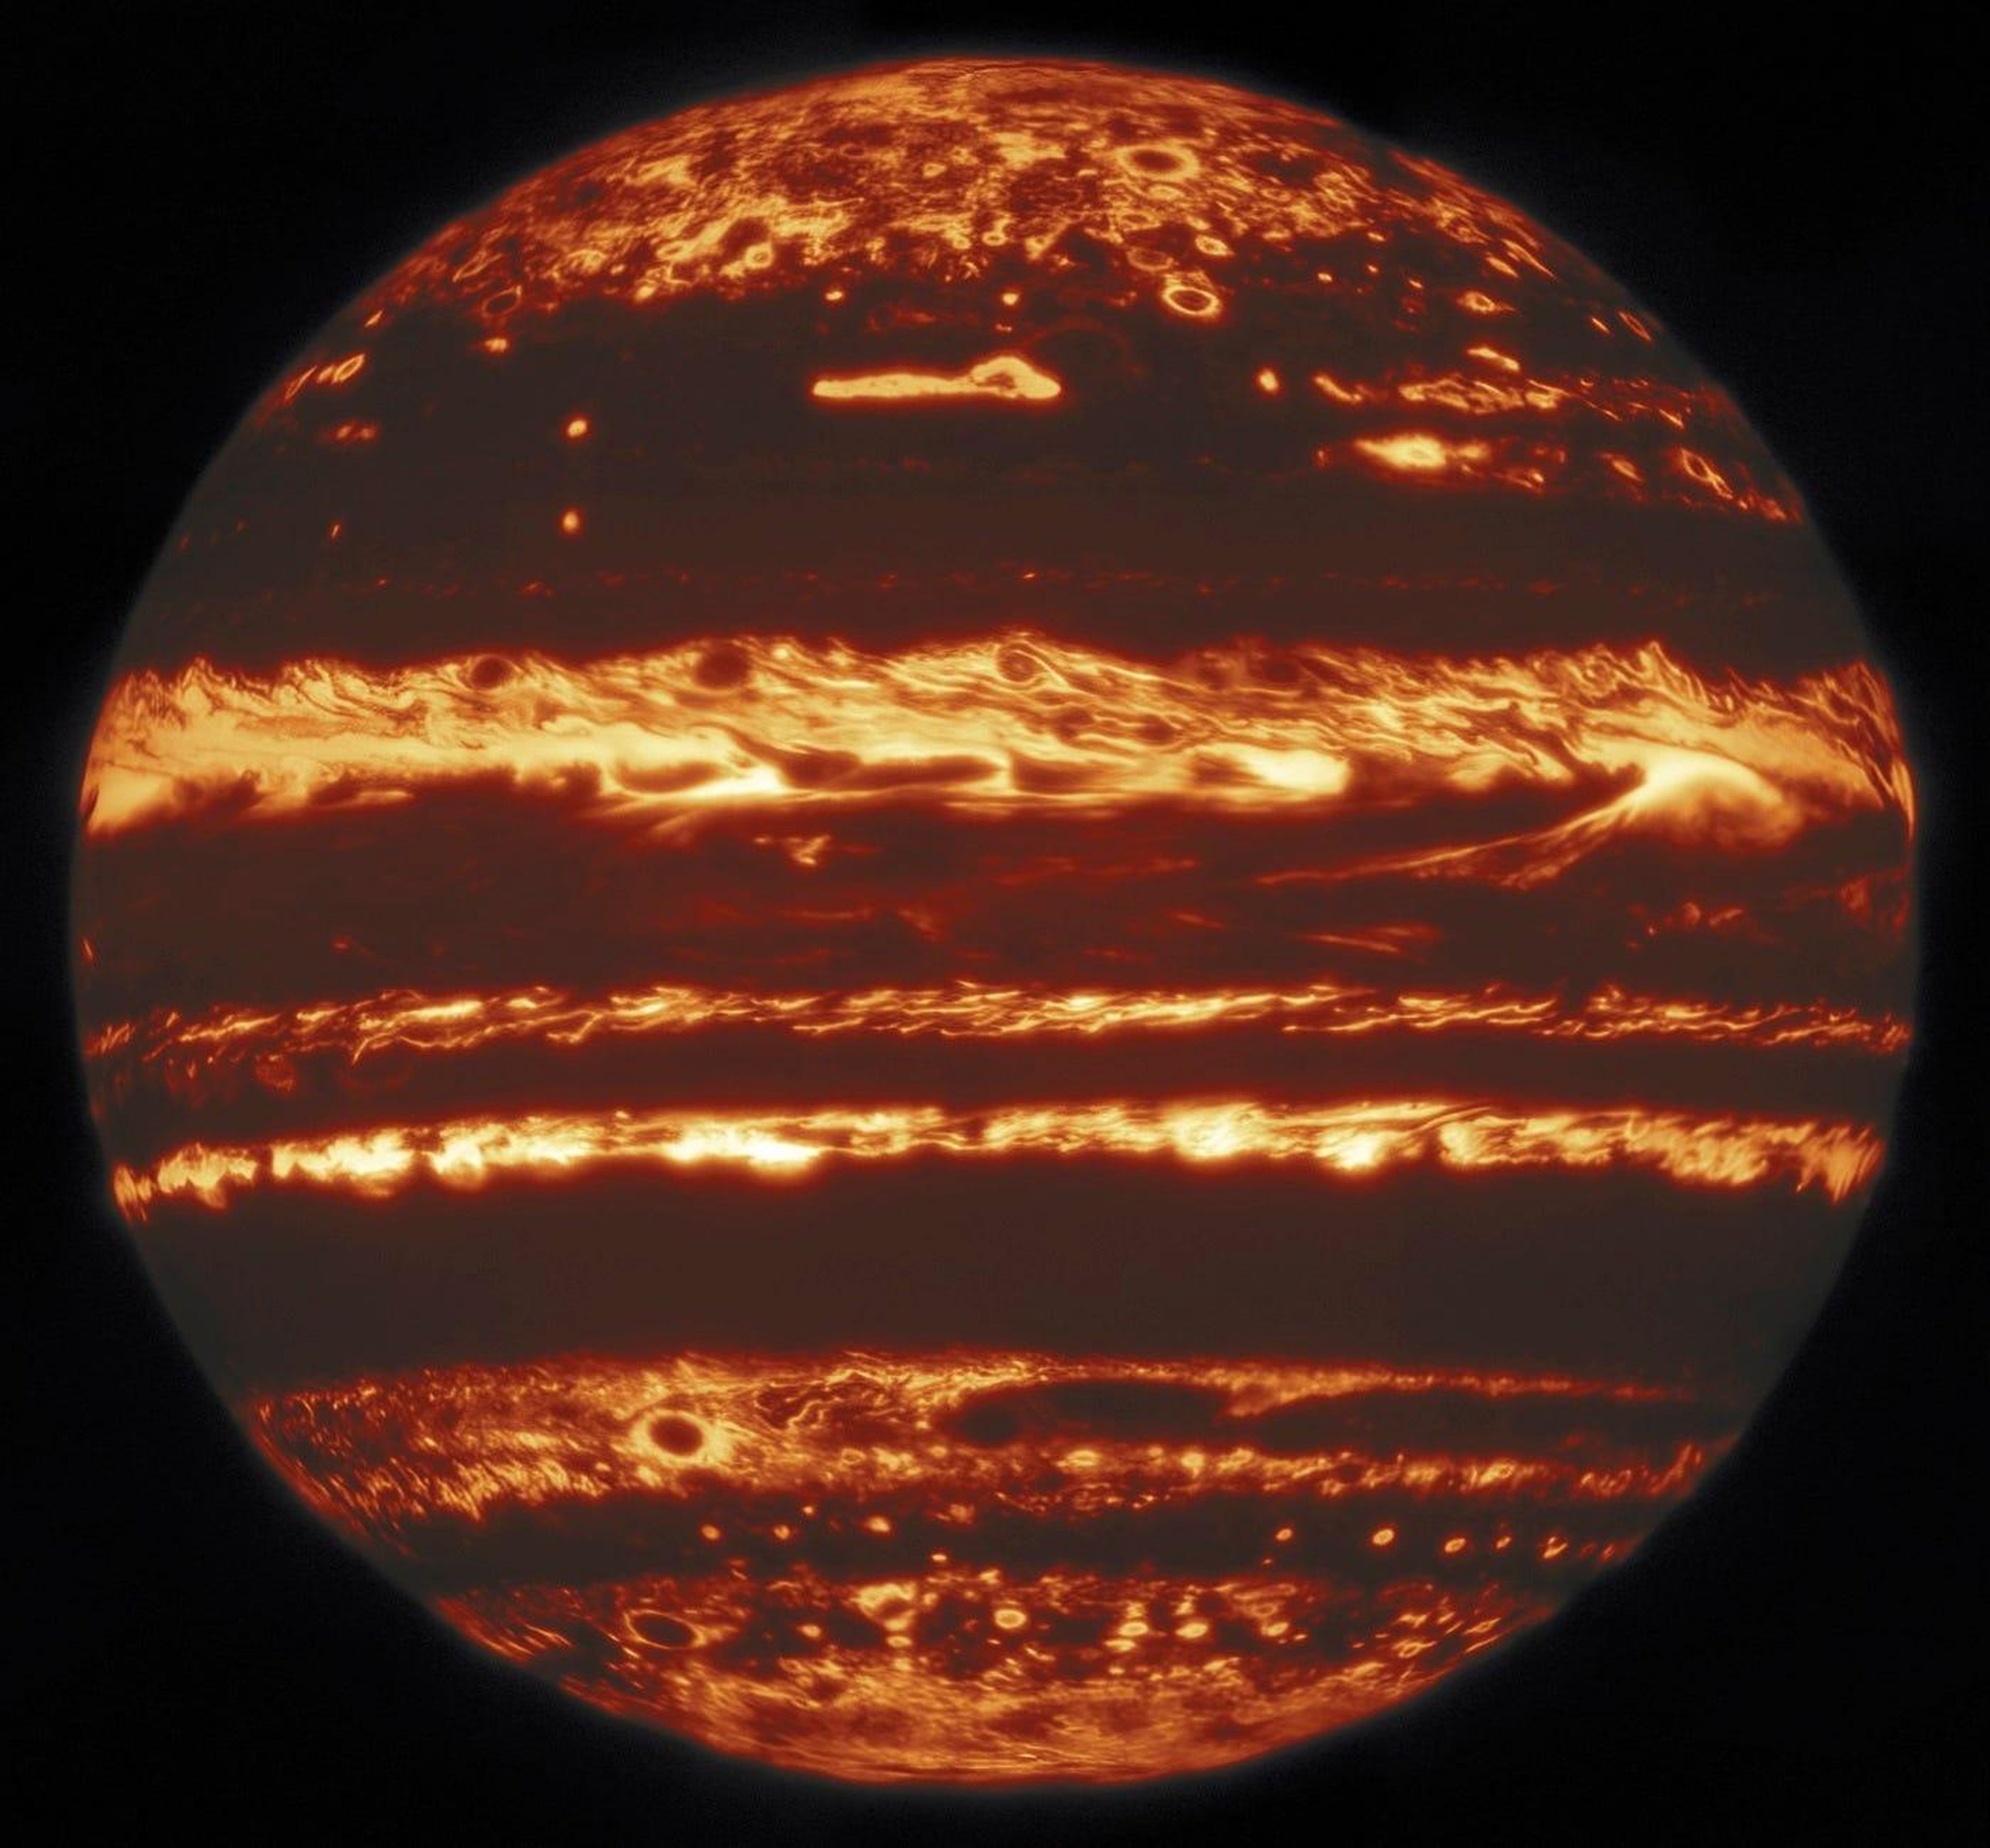 Imagen infrarroja de Júpiter, Observatorio Internacional de Gemini, 29 de mayo de 2019.